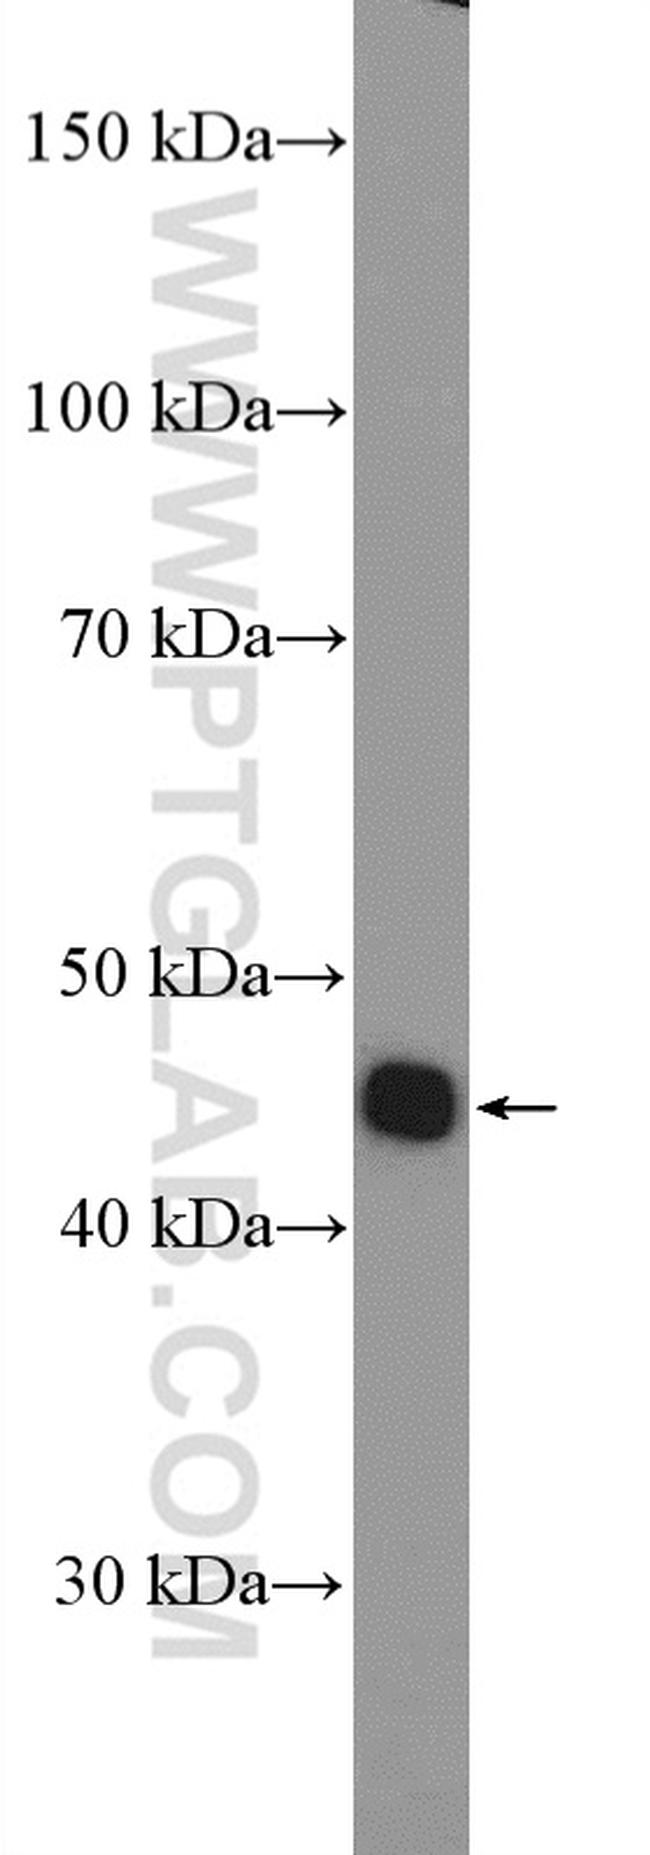 LHX3 Antibody in Western Blot (WB)